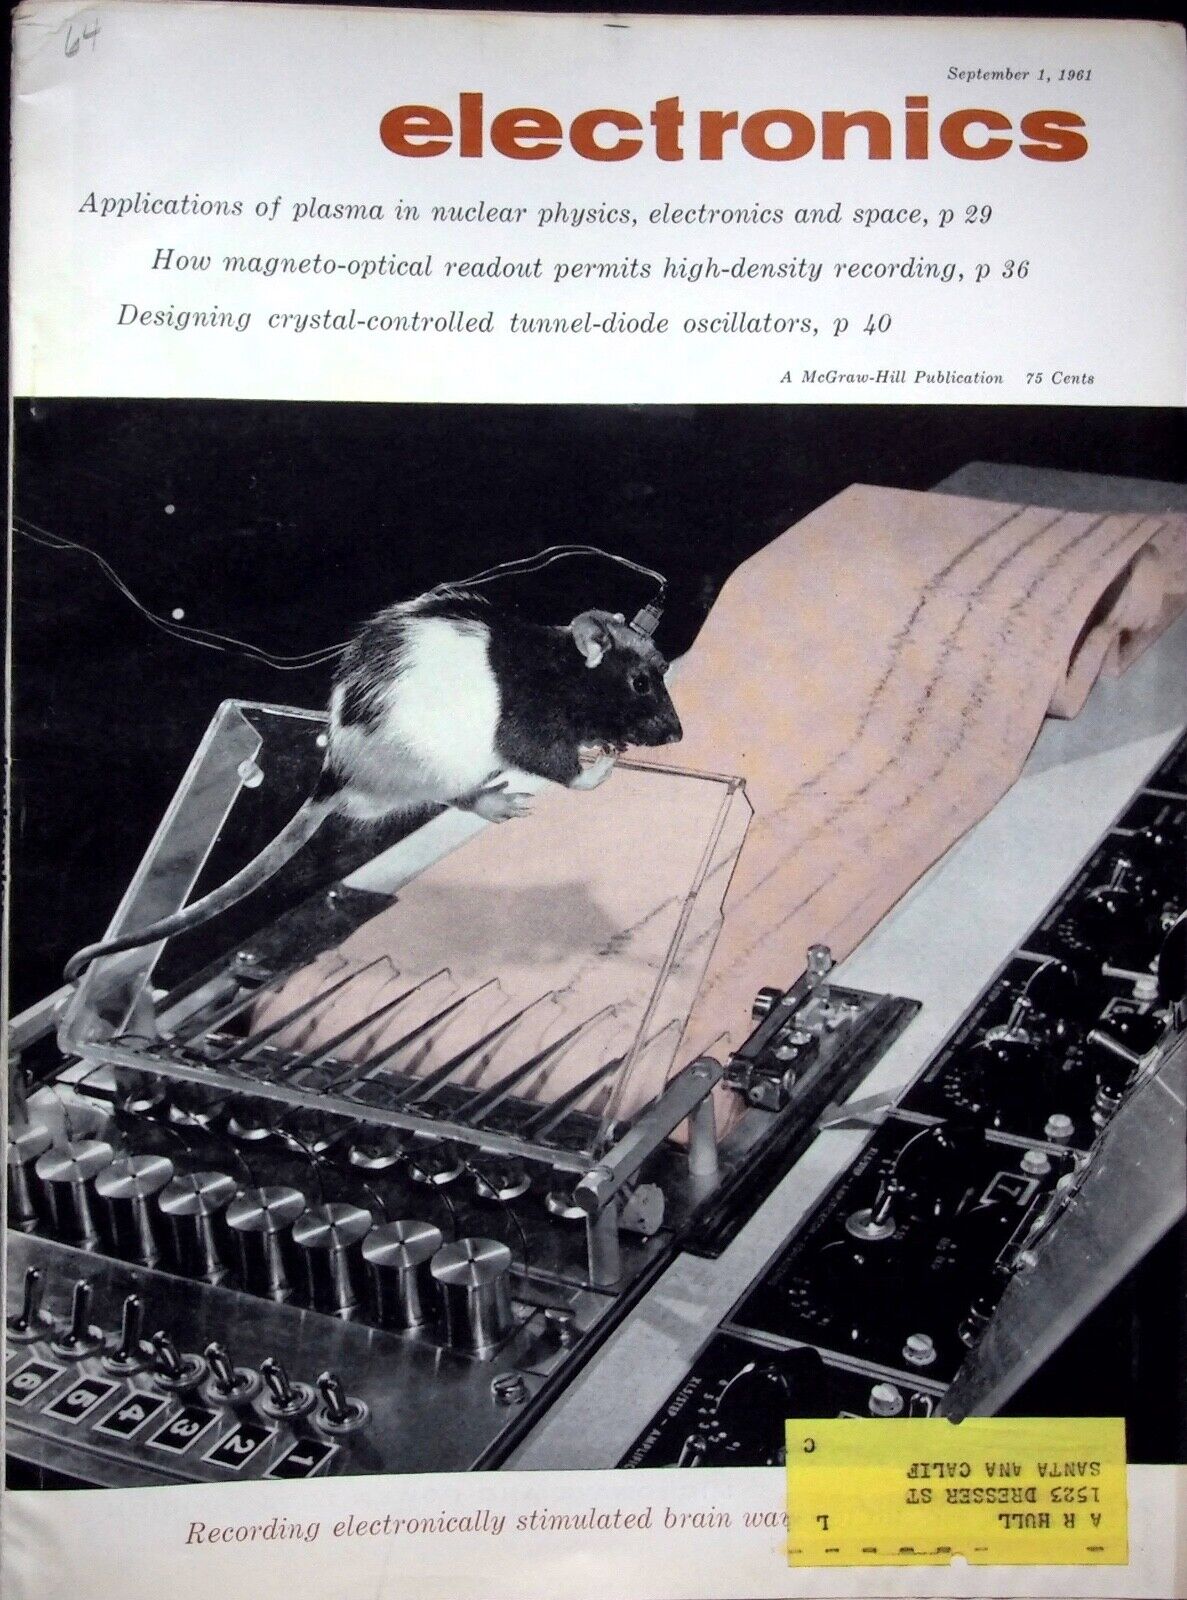 SPACE TRAVEL ON THE BRAIN - ELECTRONICS MAGAZINE, SEPTEMBER 1, 1961